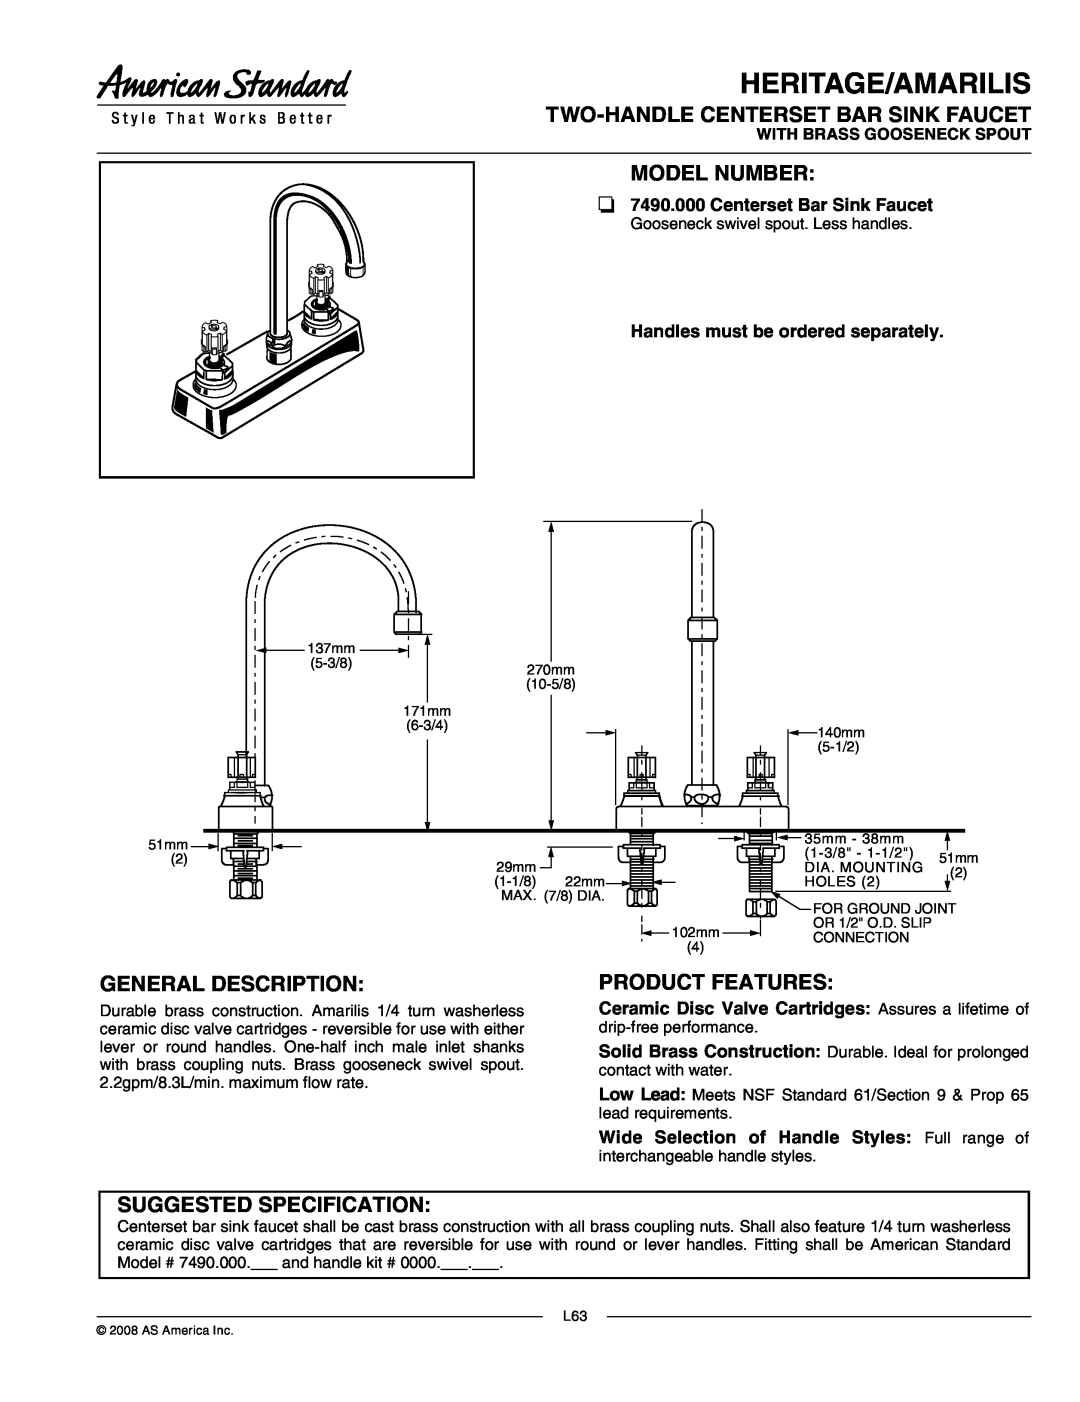 American Standard 7490.000 manual Heritage/Amarilis, Two-Handlecenterset Bar Sink Faucet, Model Number, Product Features 